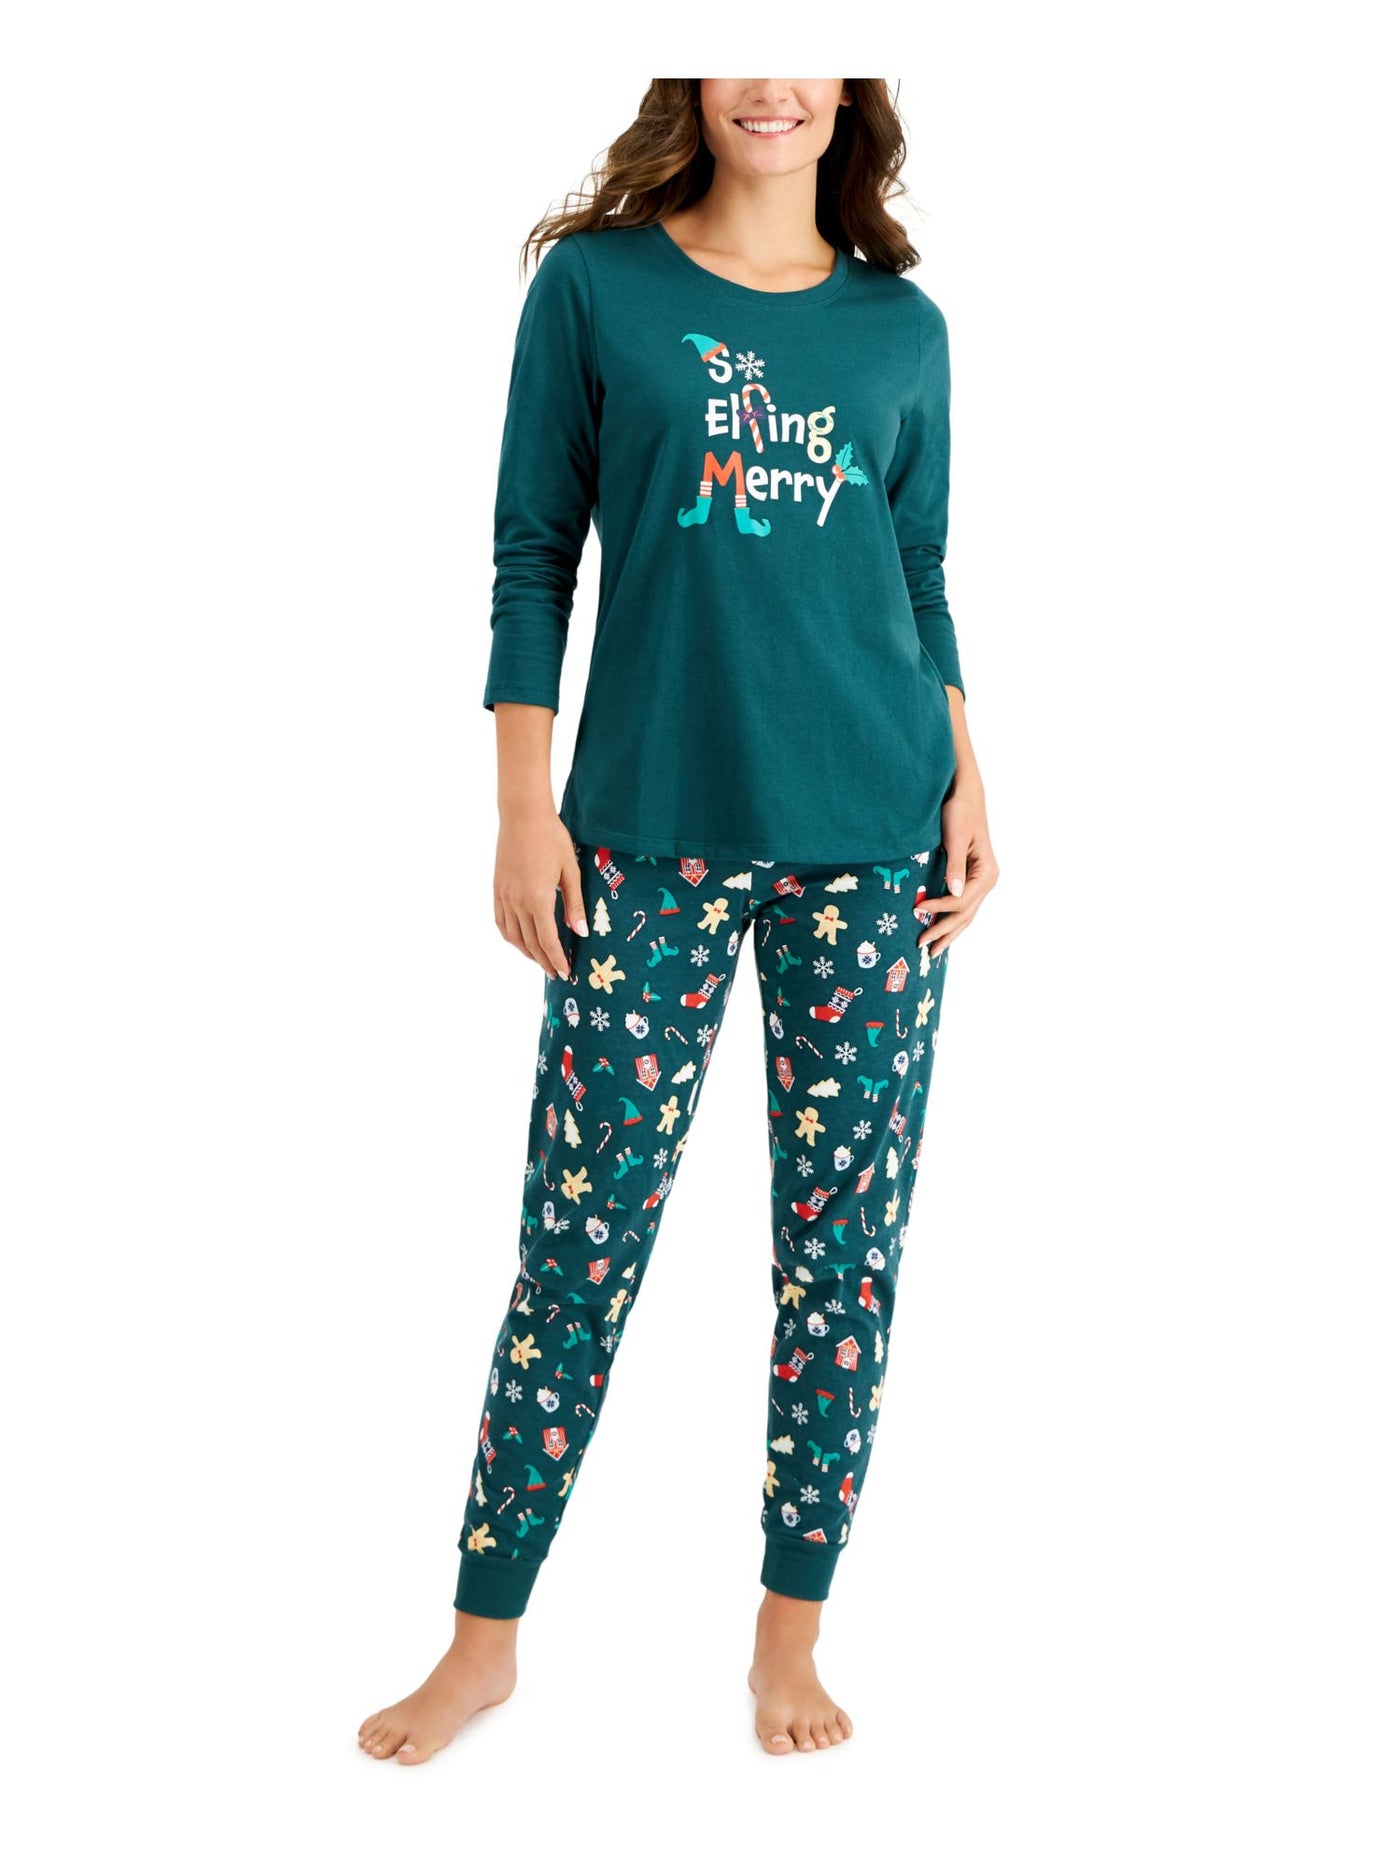 FAMILY PJs Womens So Elfing Merry Green Graphic Elastic Band Long Sleeve T-Shirt Top Cuffed Pants Pajamas L